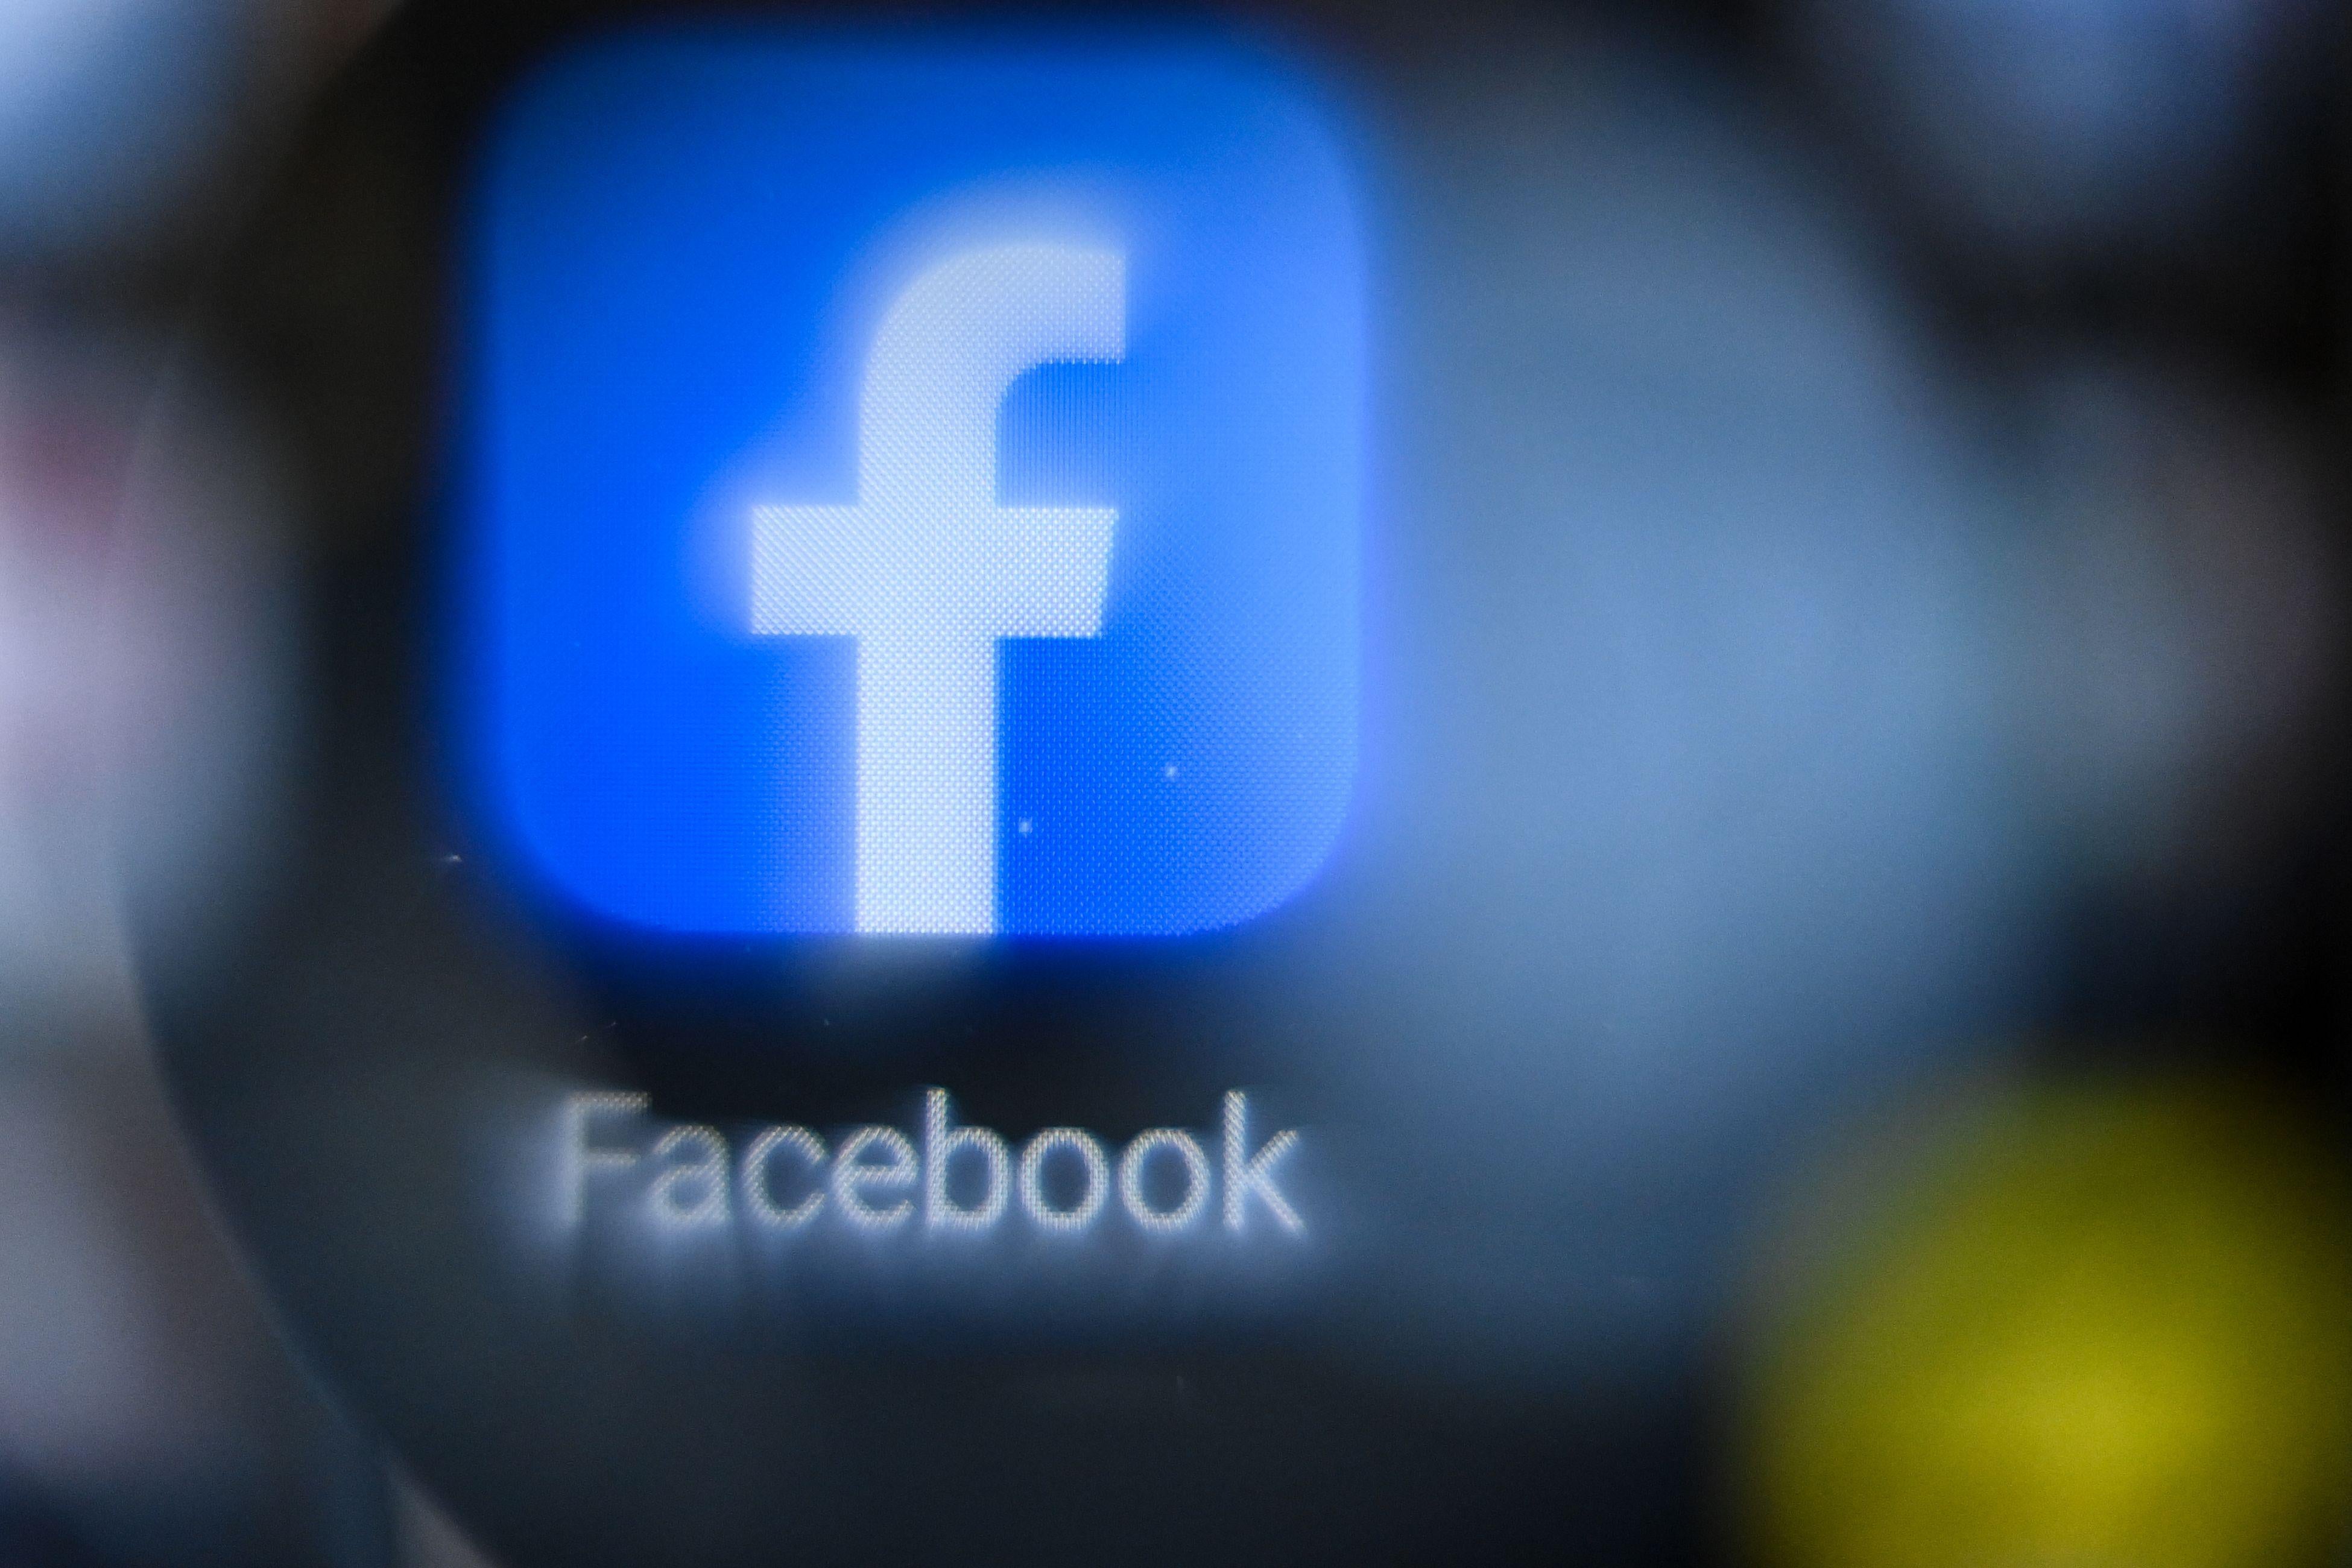 A blurry Facebook logo on a smartphone screen.